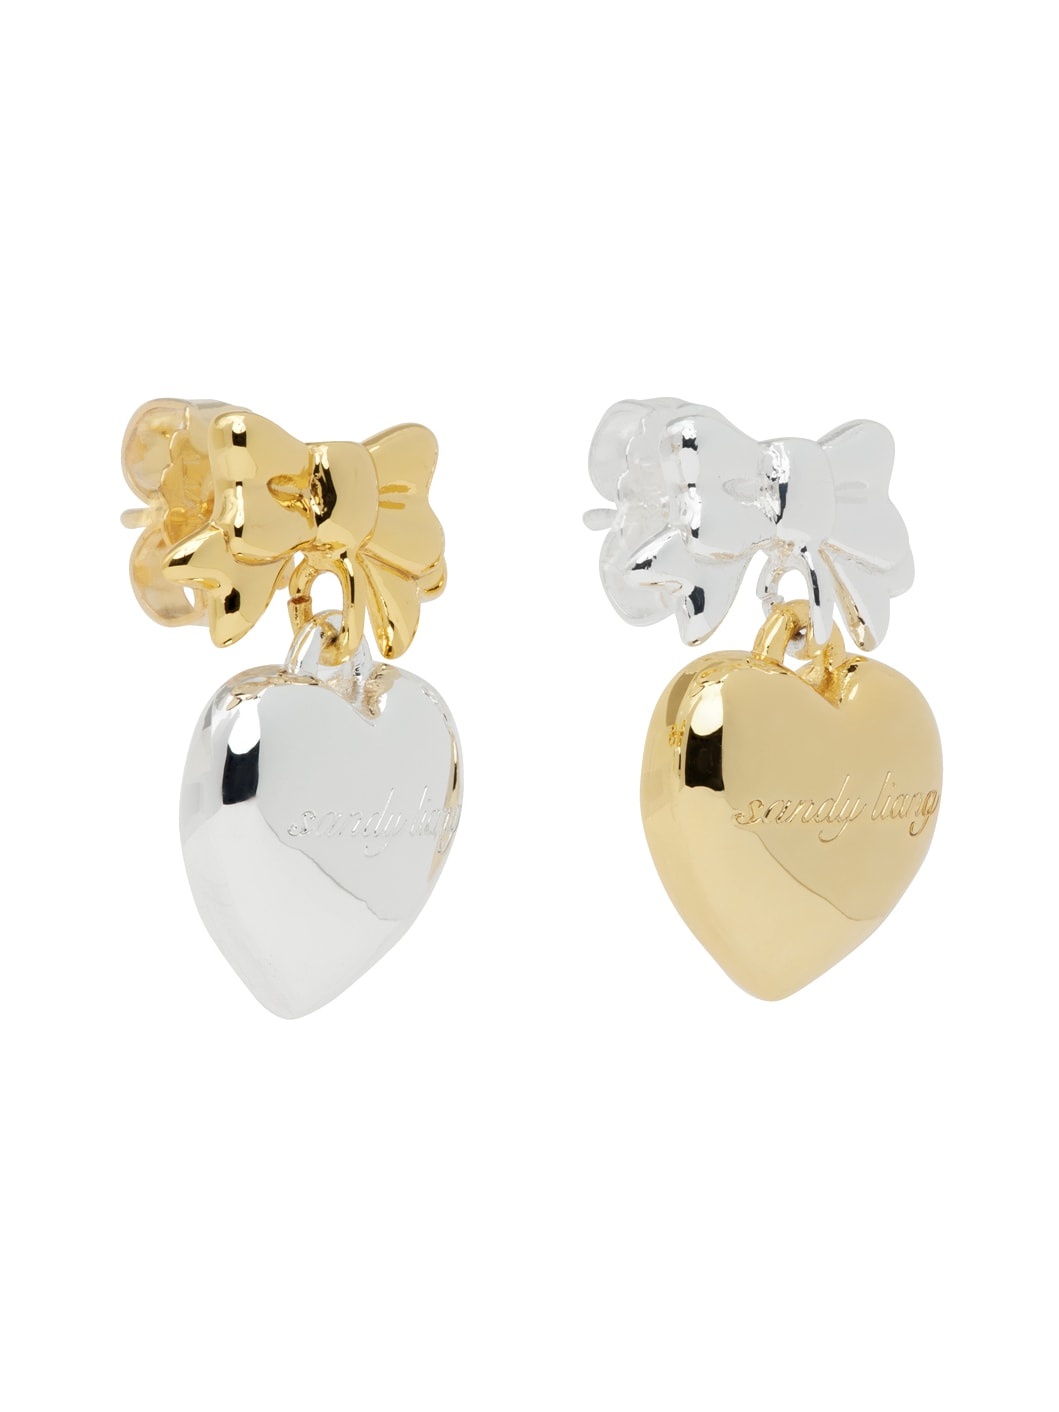 Silver & Gold Ballerina Earrings - 2